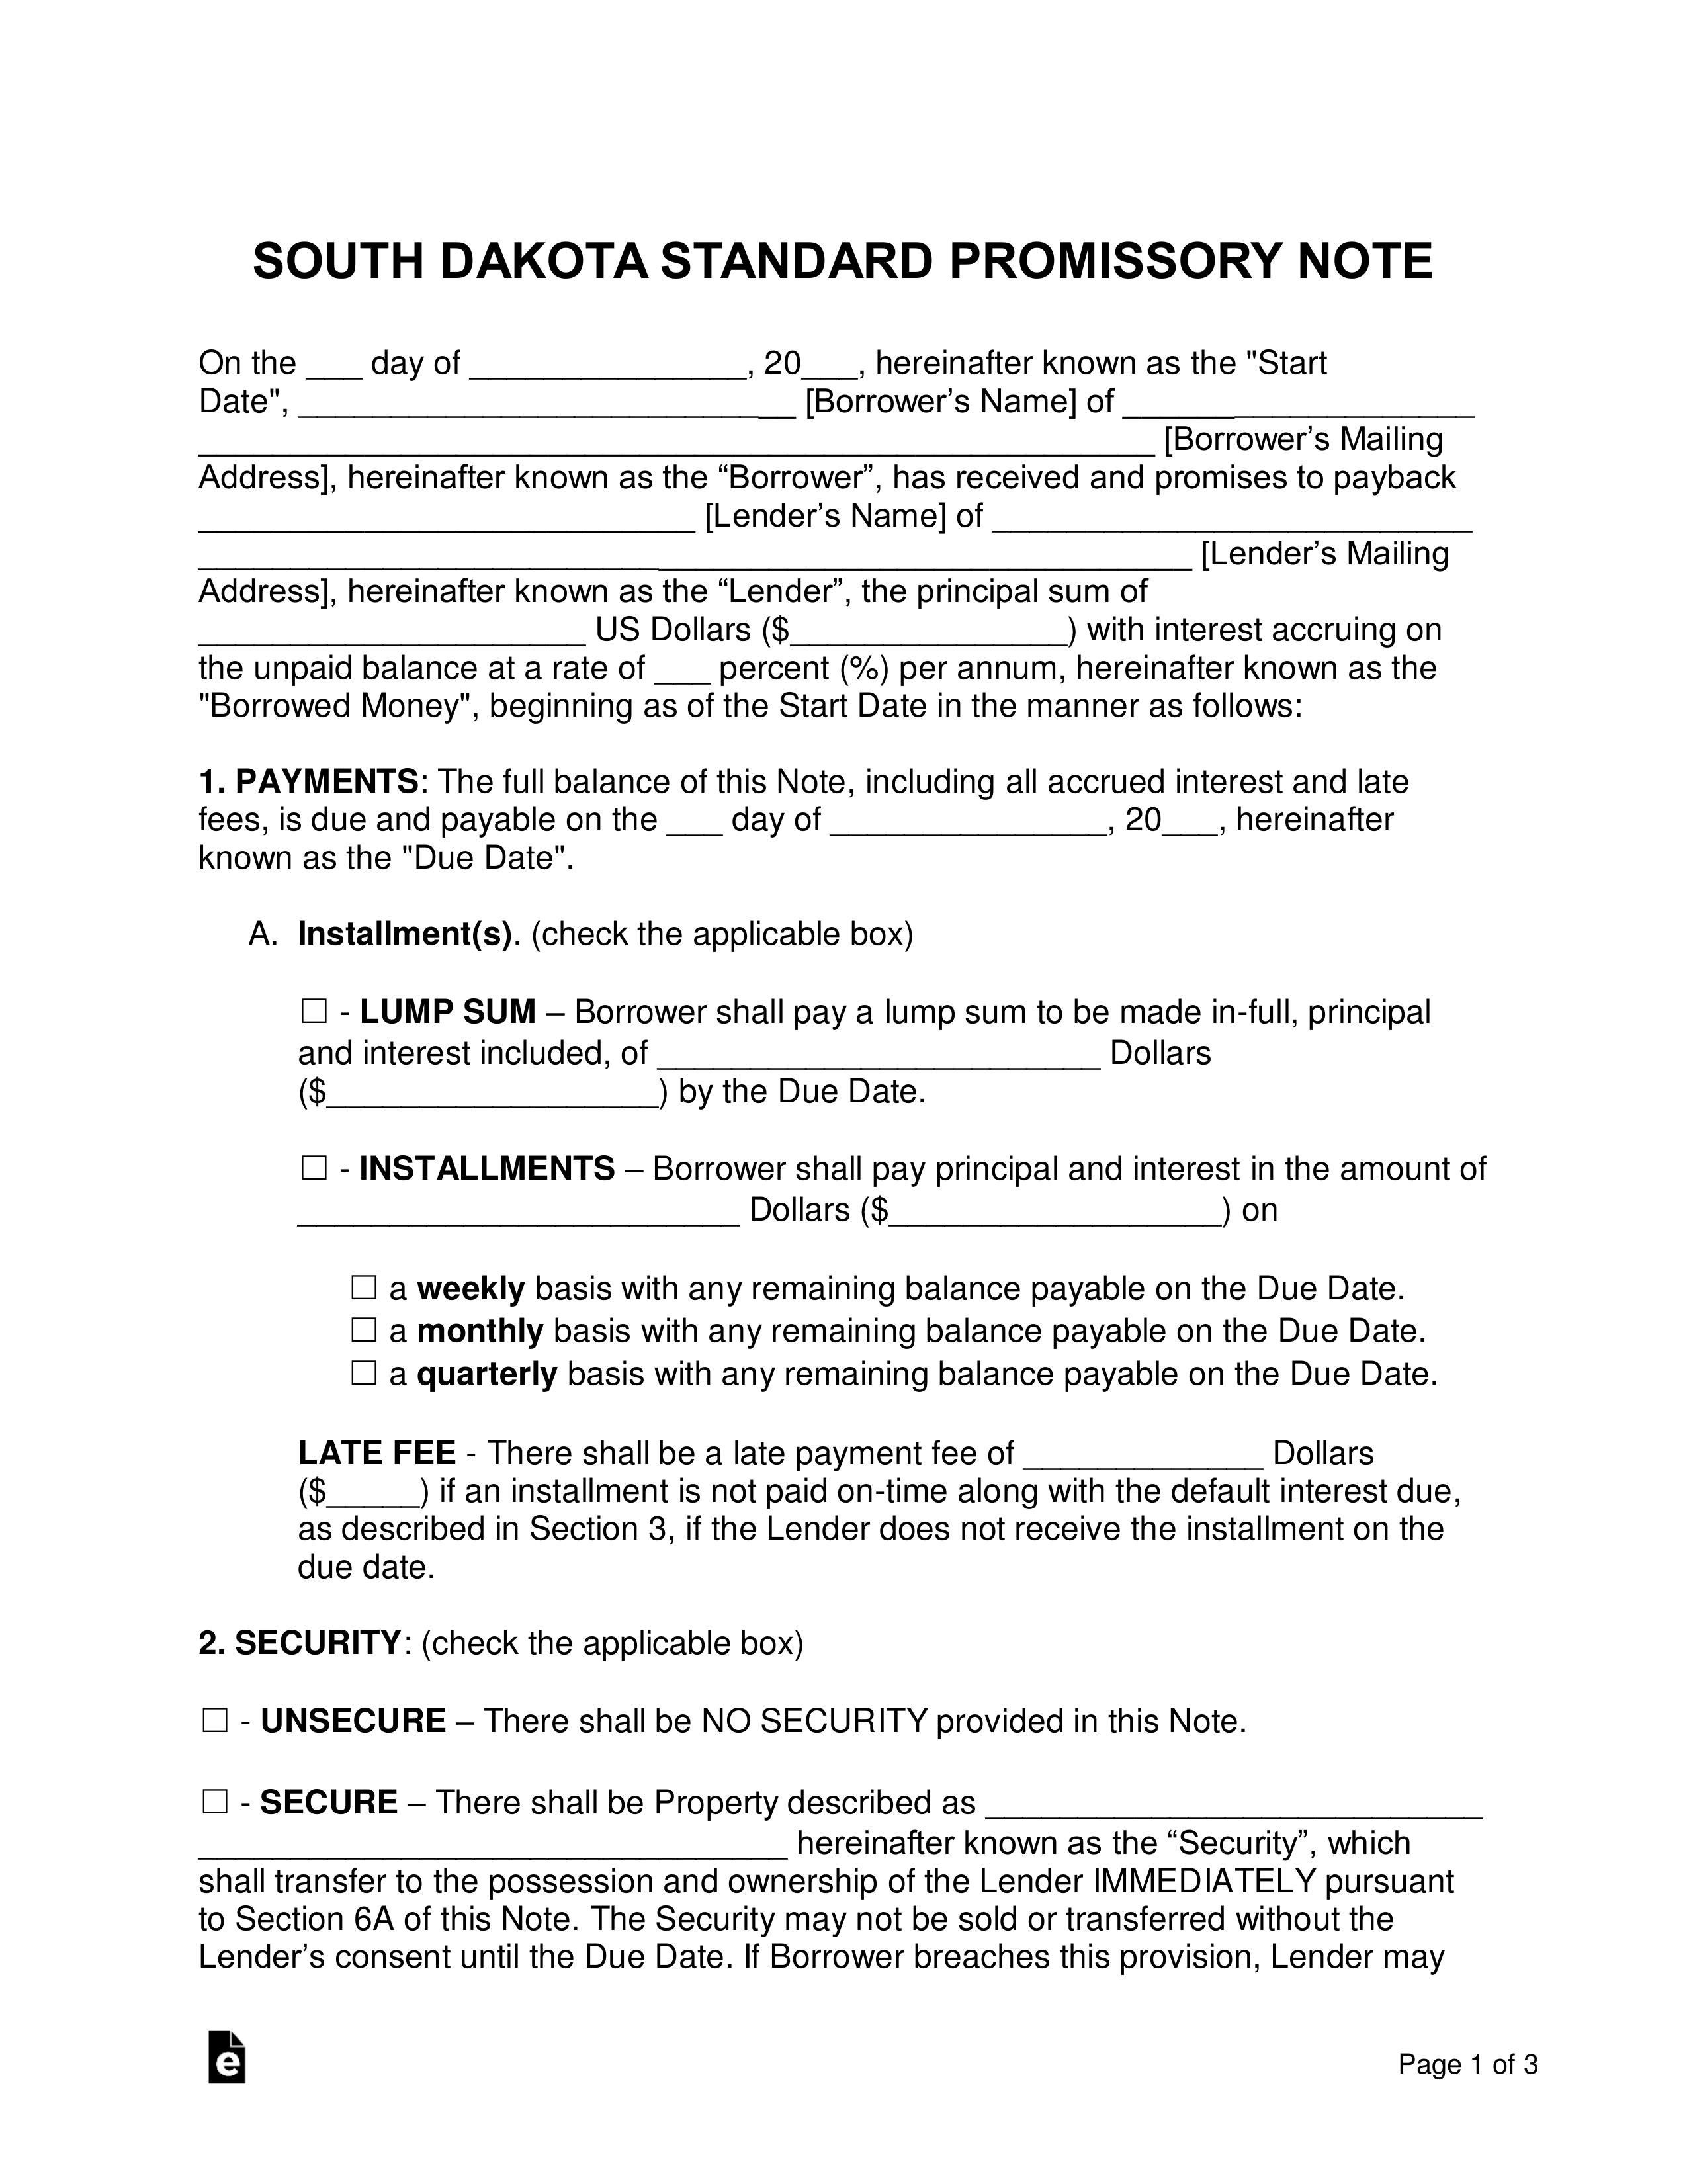 South Dakota Promissory Note Templates (2)